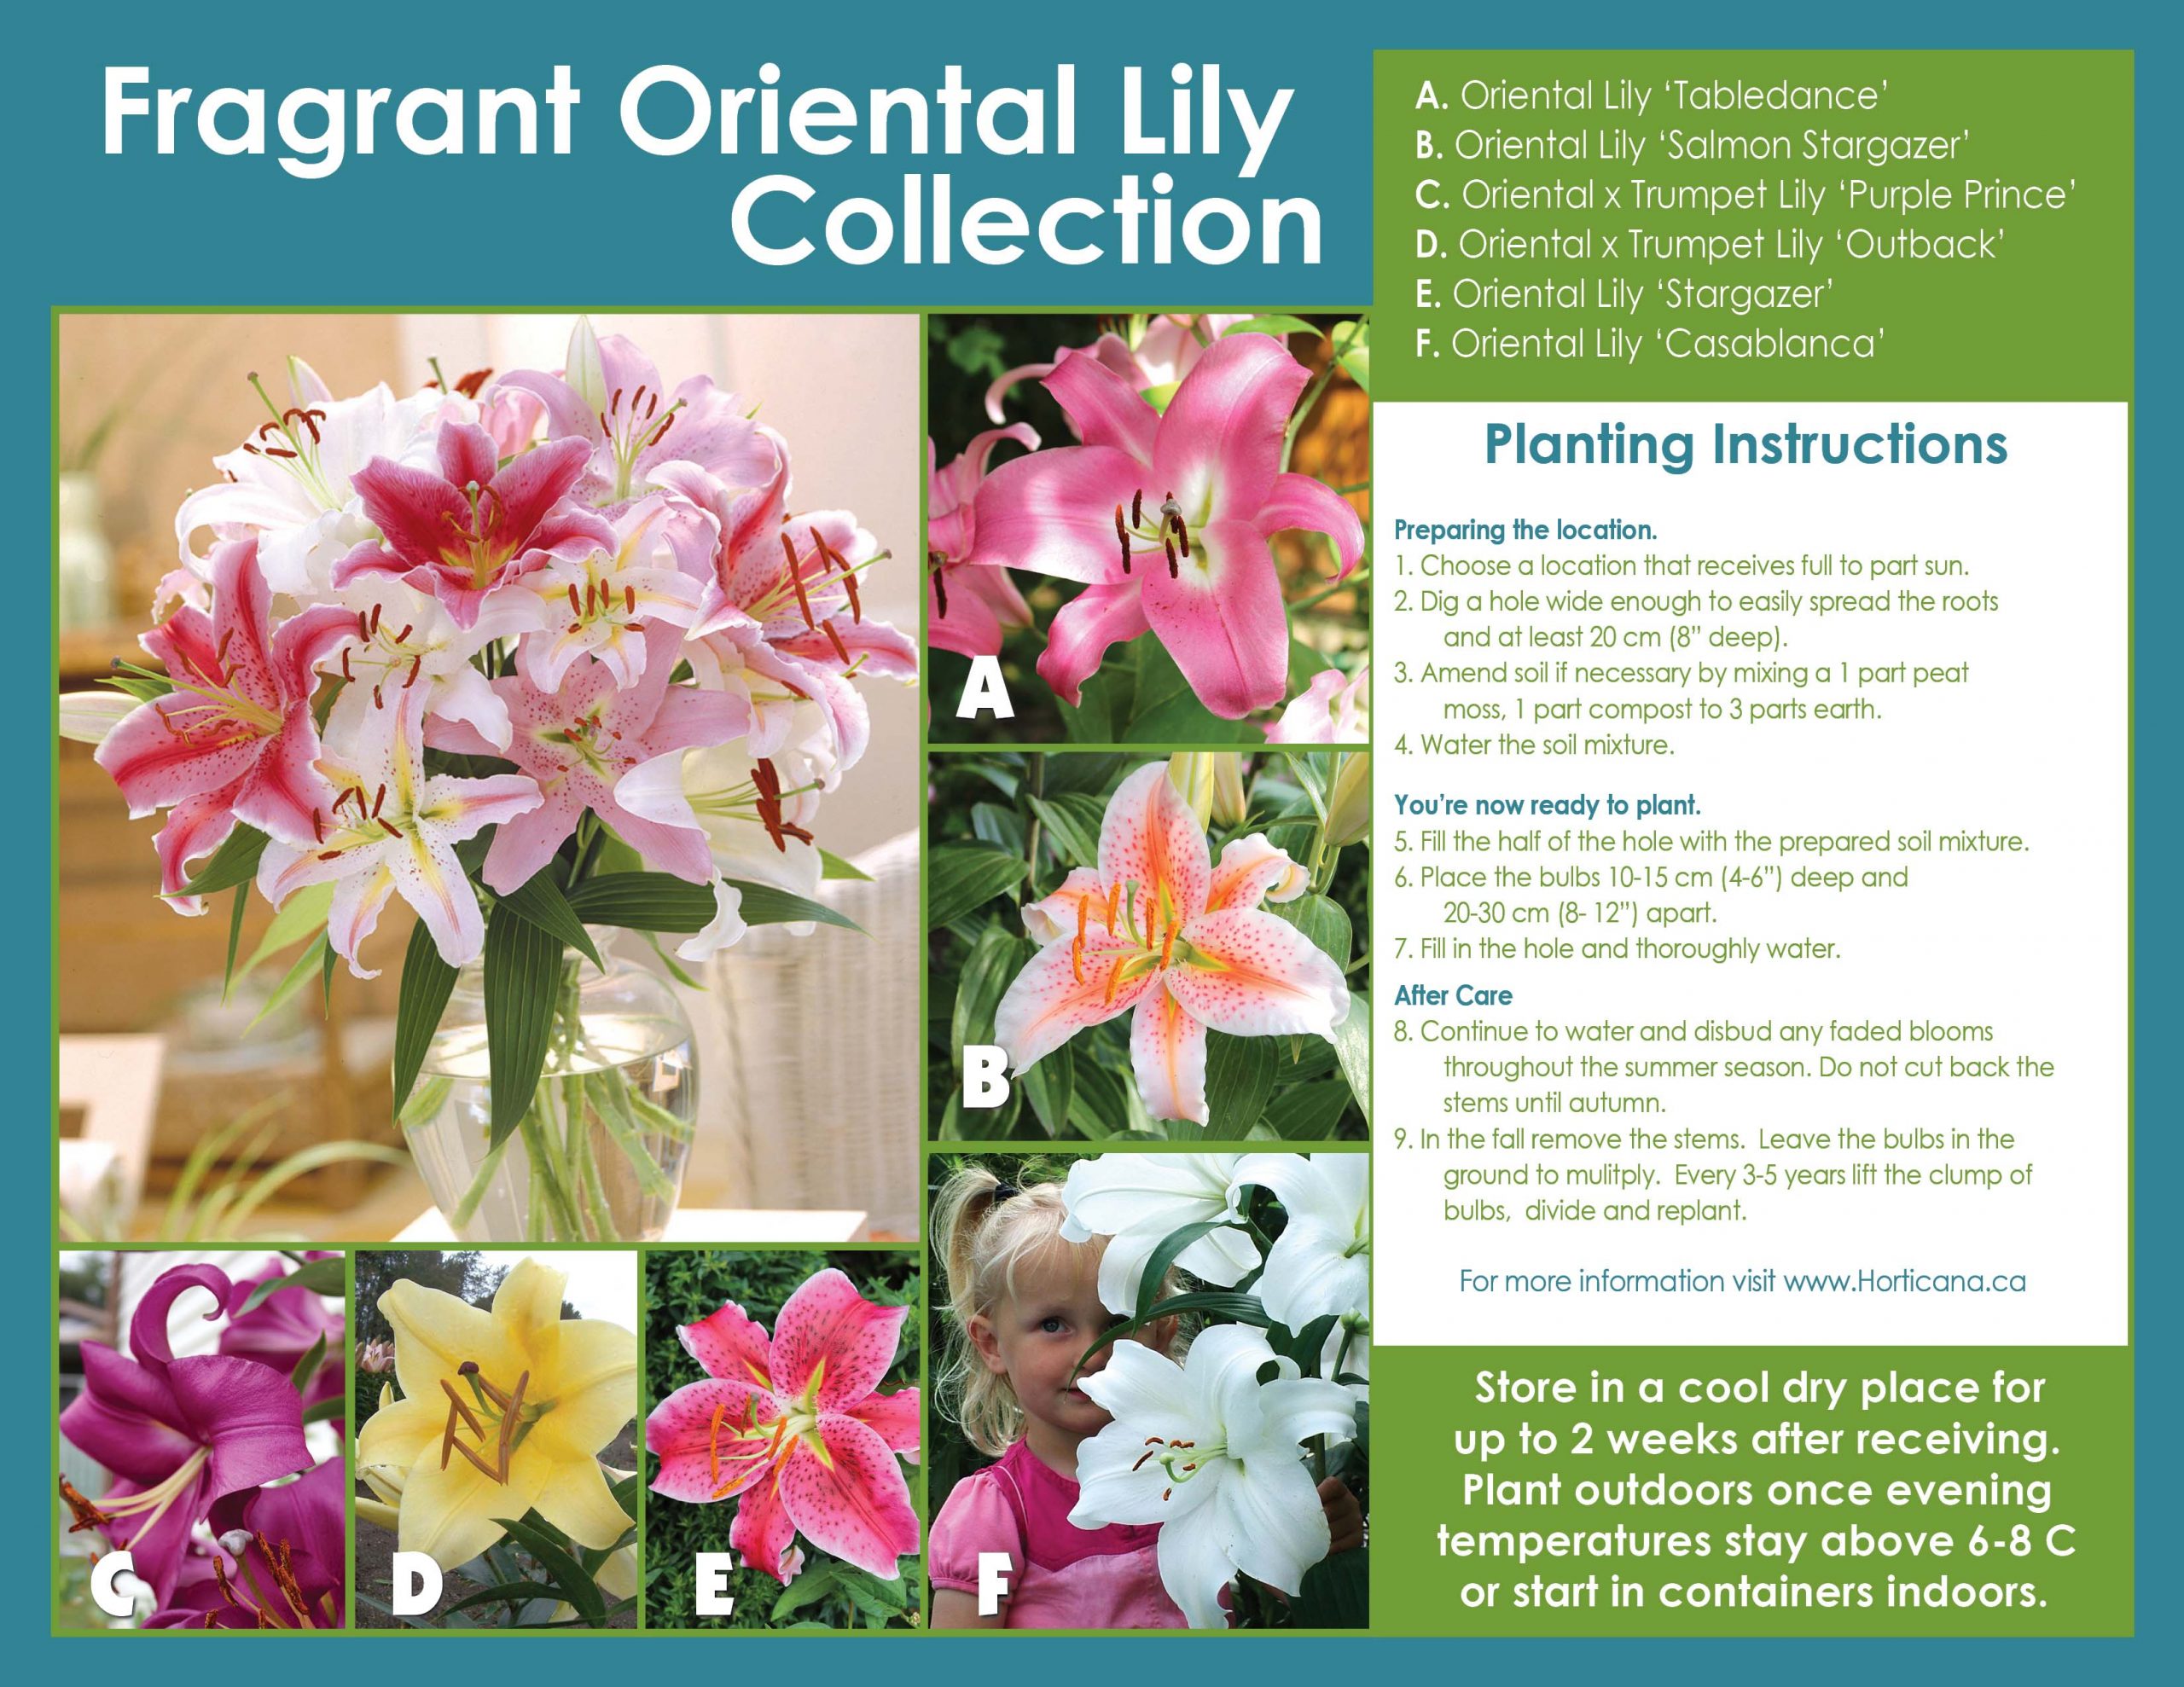 Fragrant Oriental Lily CollectionCollection de lis orientaux odorants -  Horticana